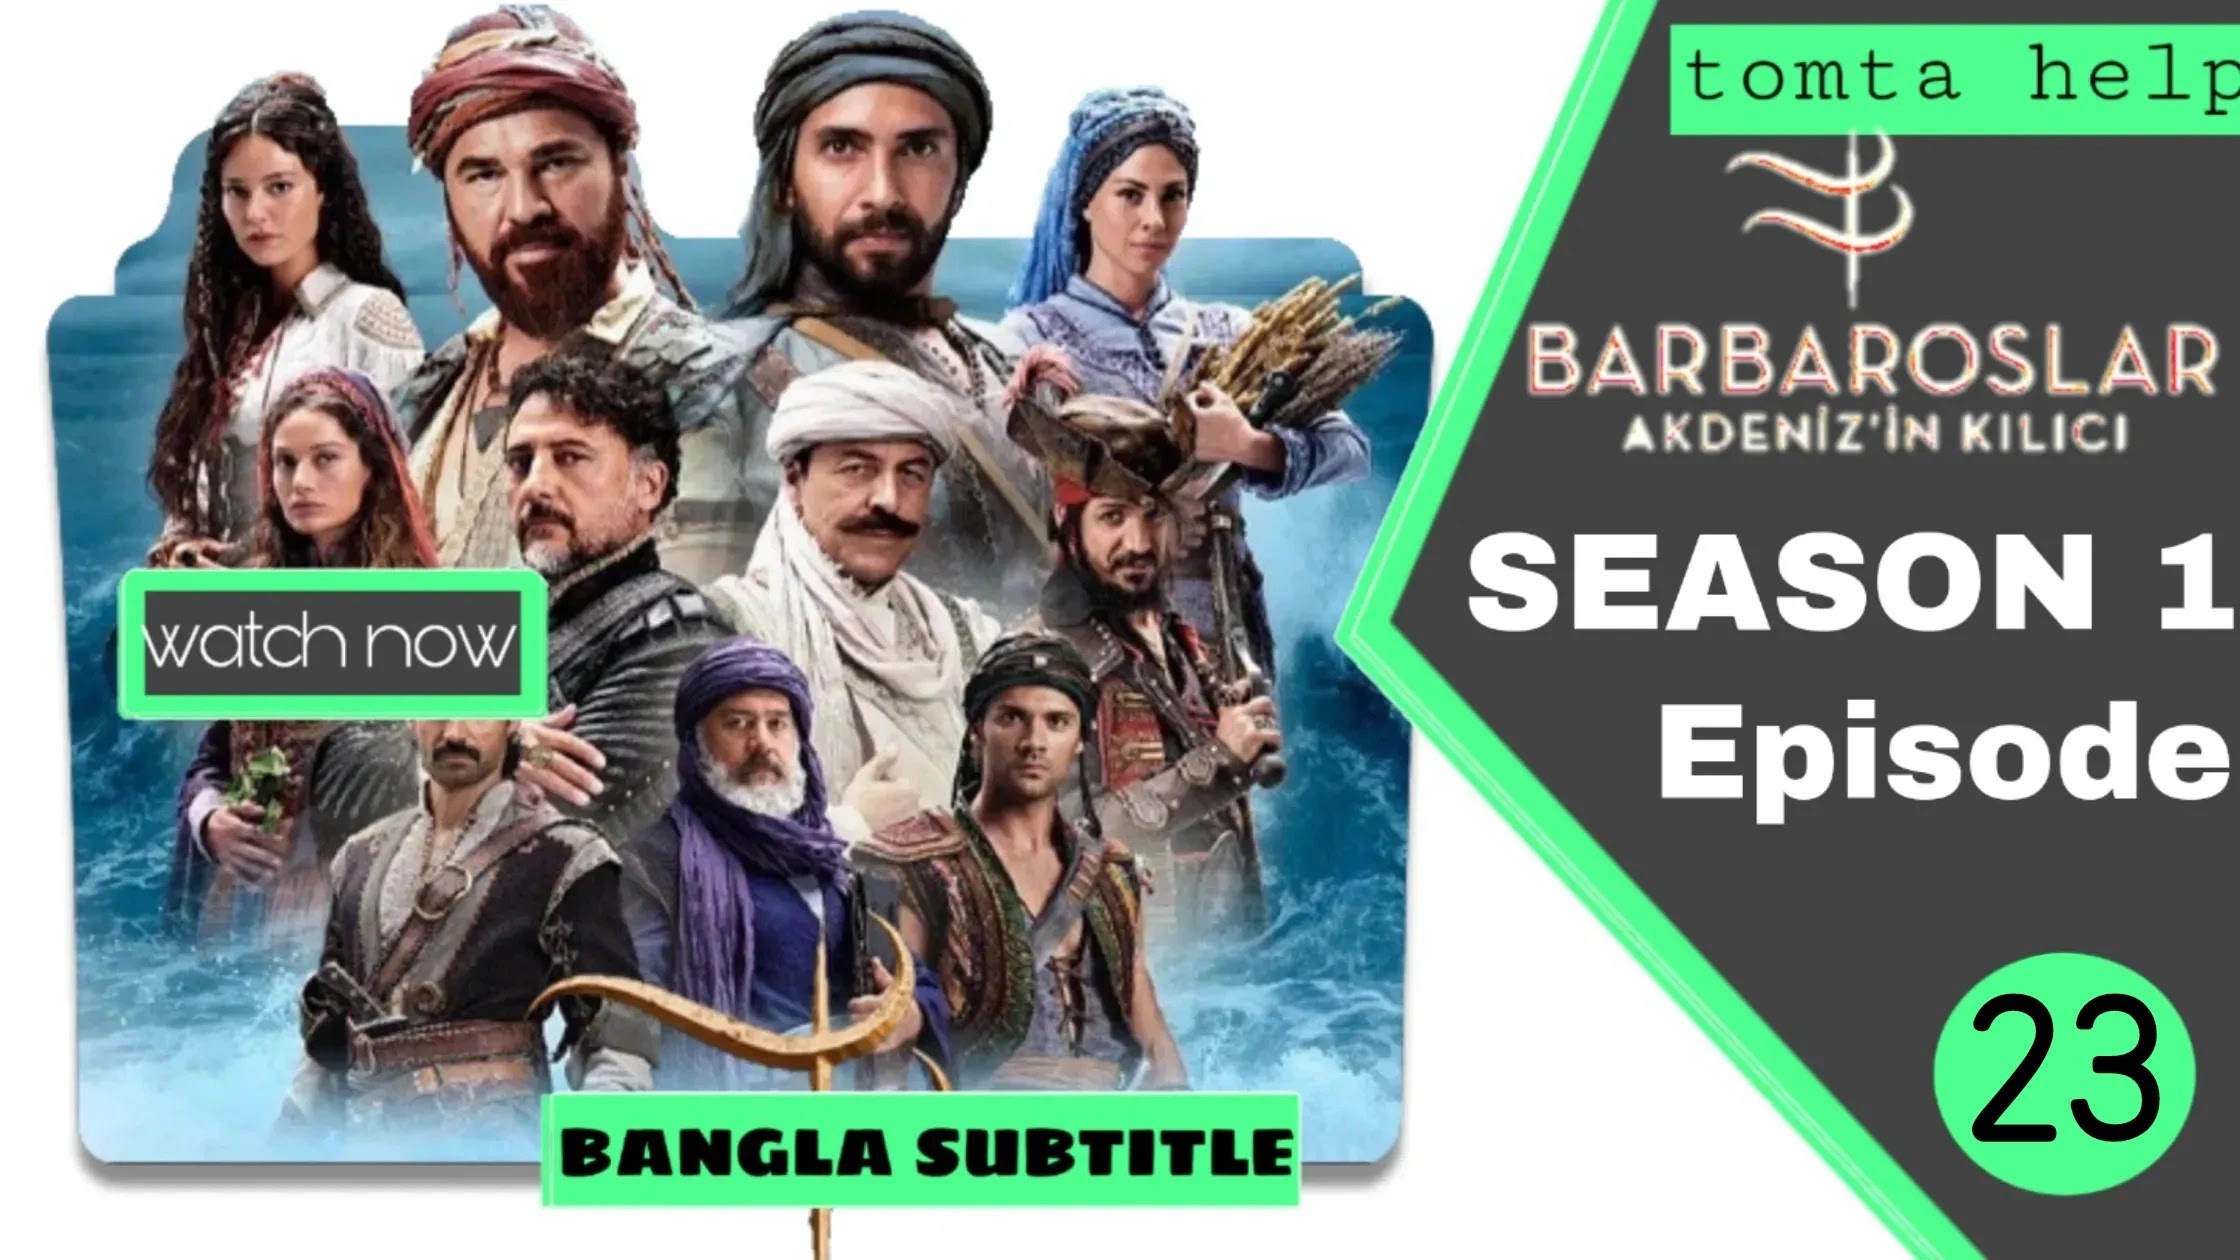 Barbaroslar Episode 23 Bangla Subtitle